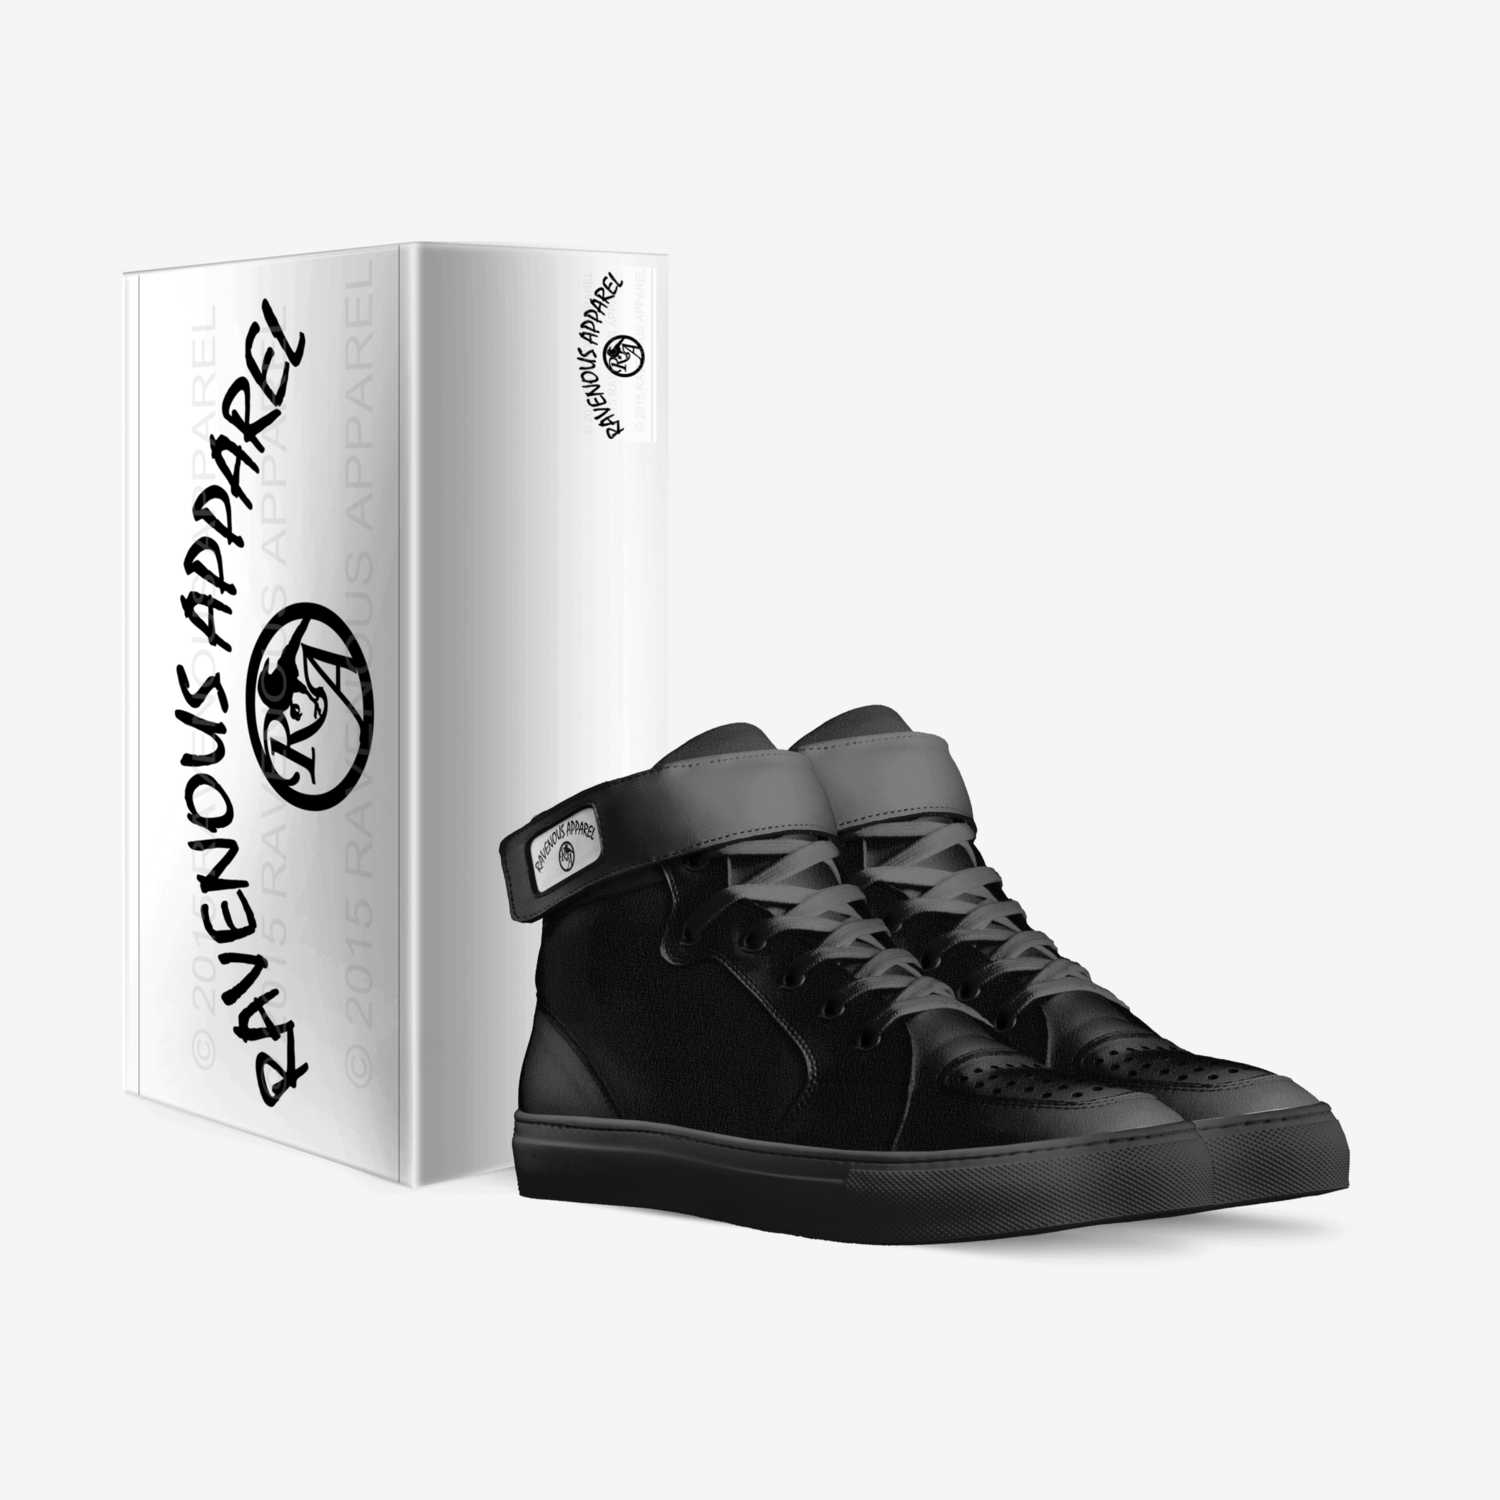 RaveBlacks custom made in Italy shoes by Thomas Rodriguez | Box view